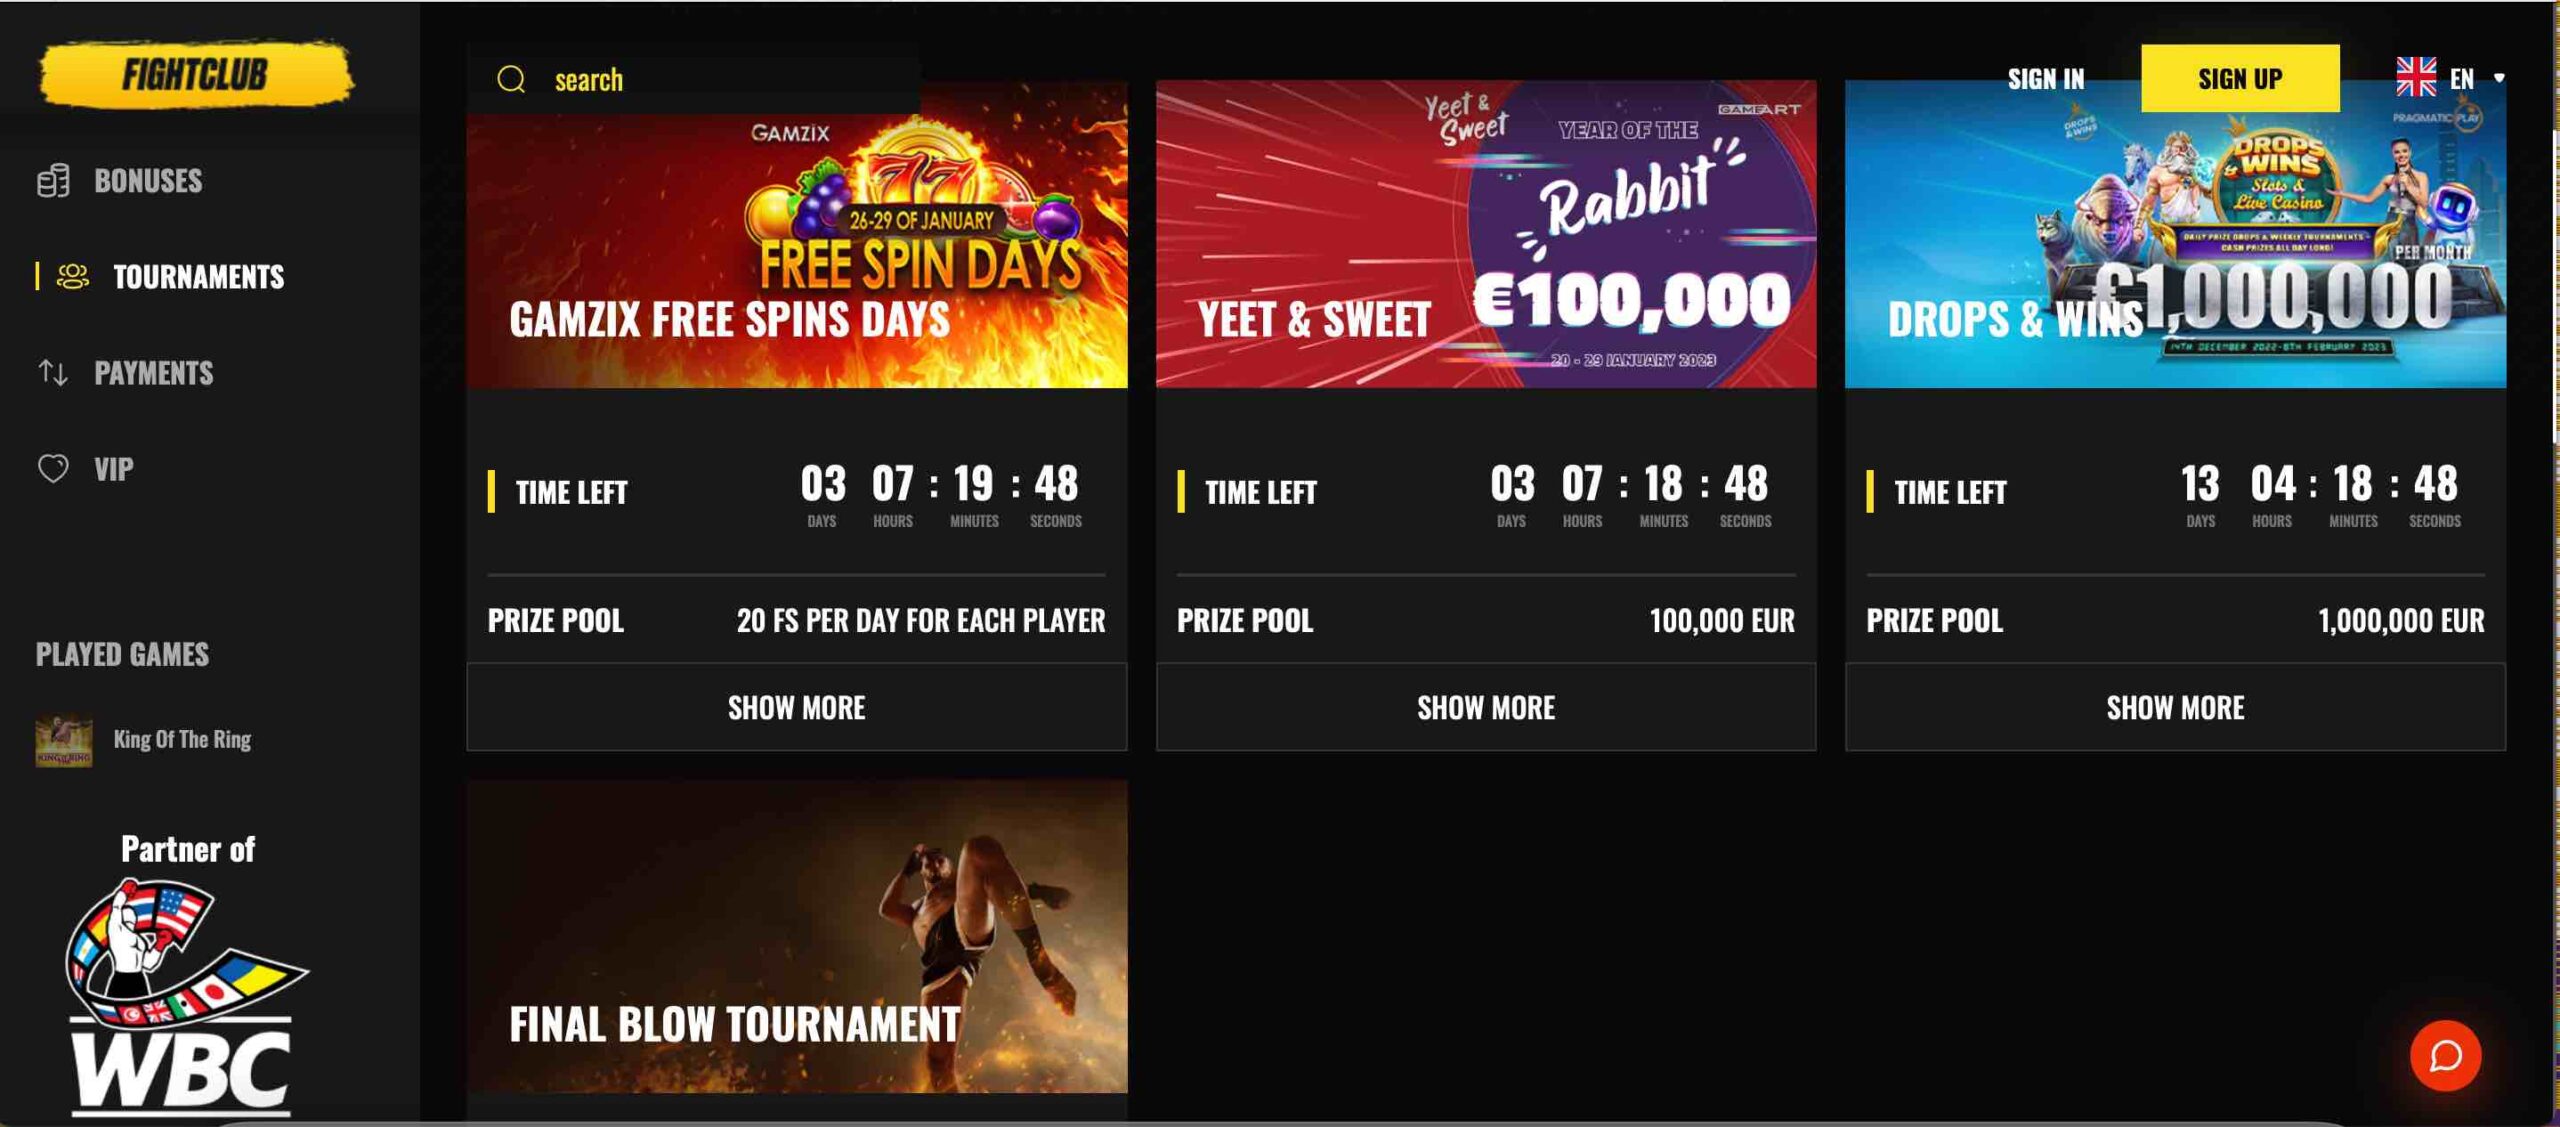 FightClub Casino Tournaments